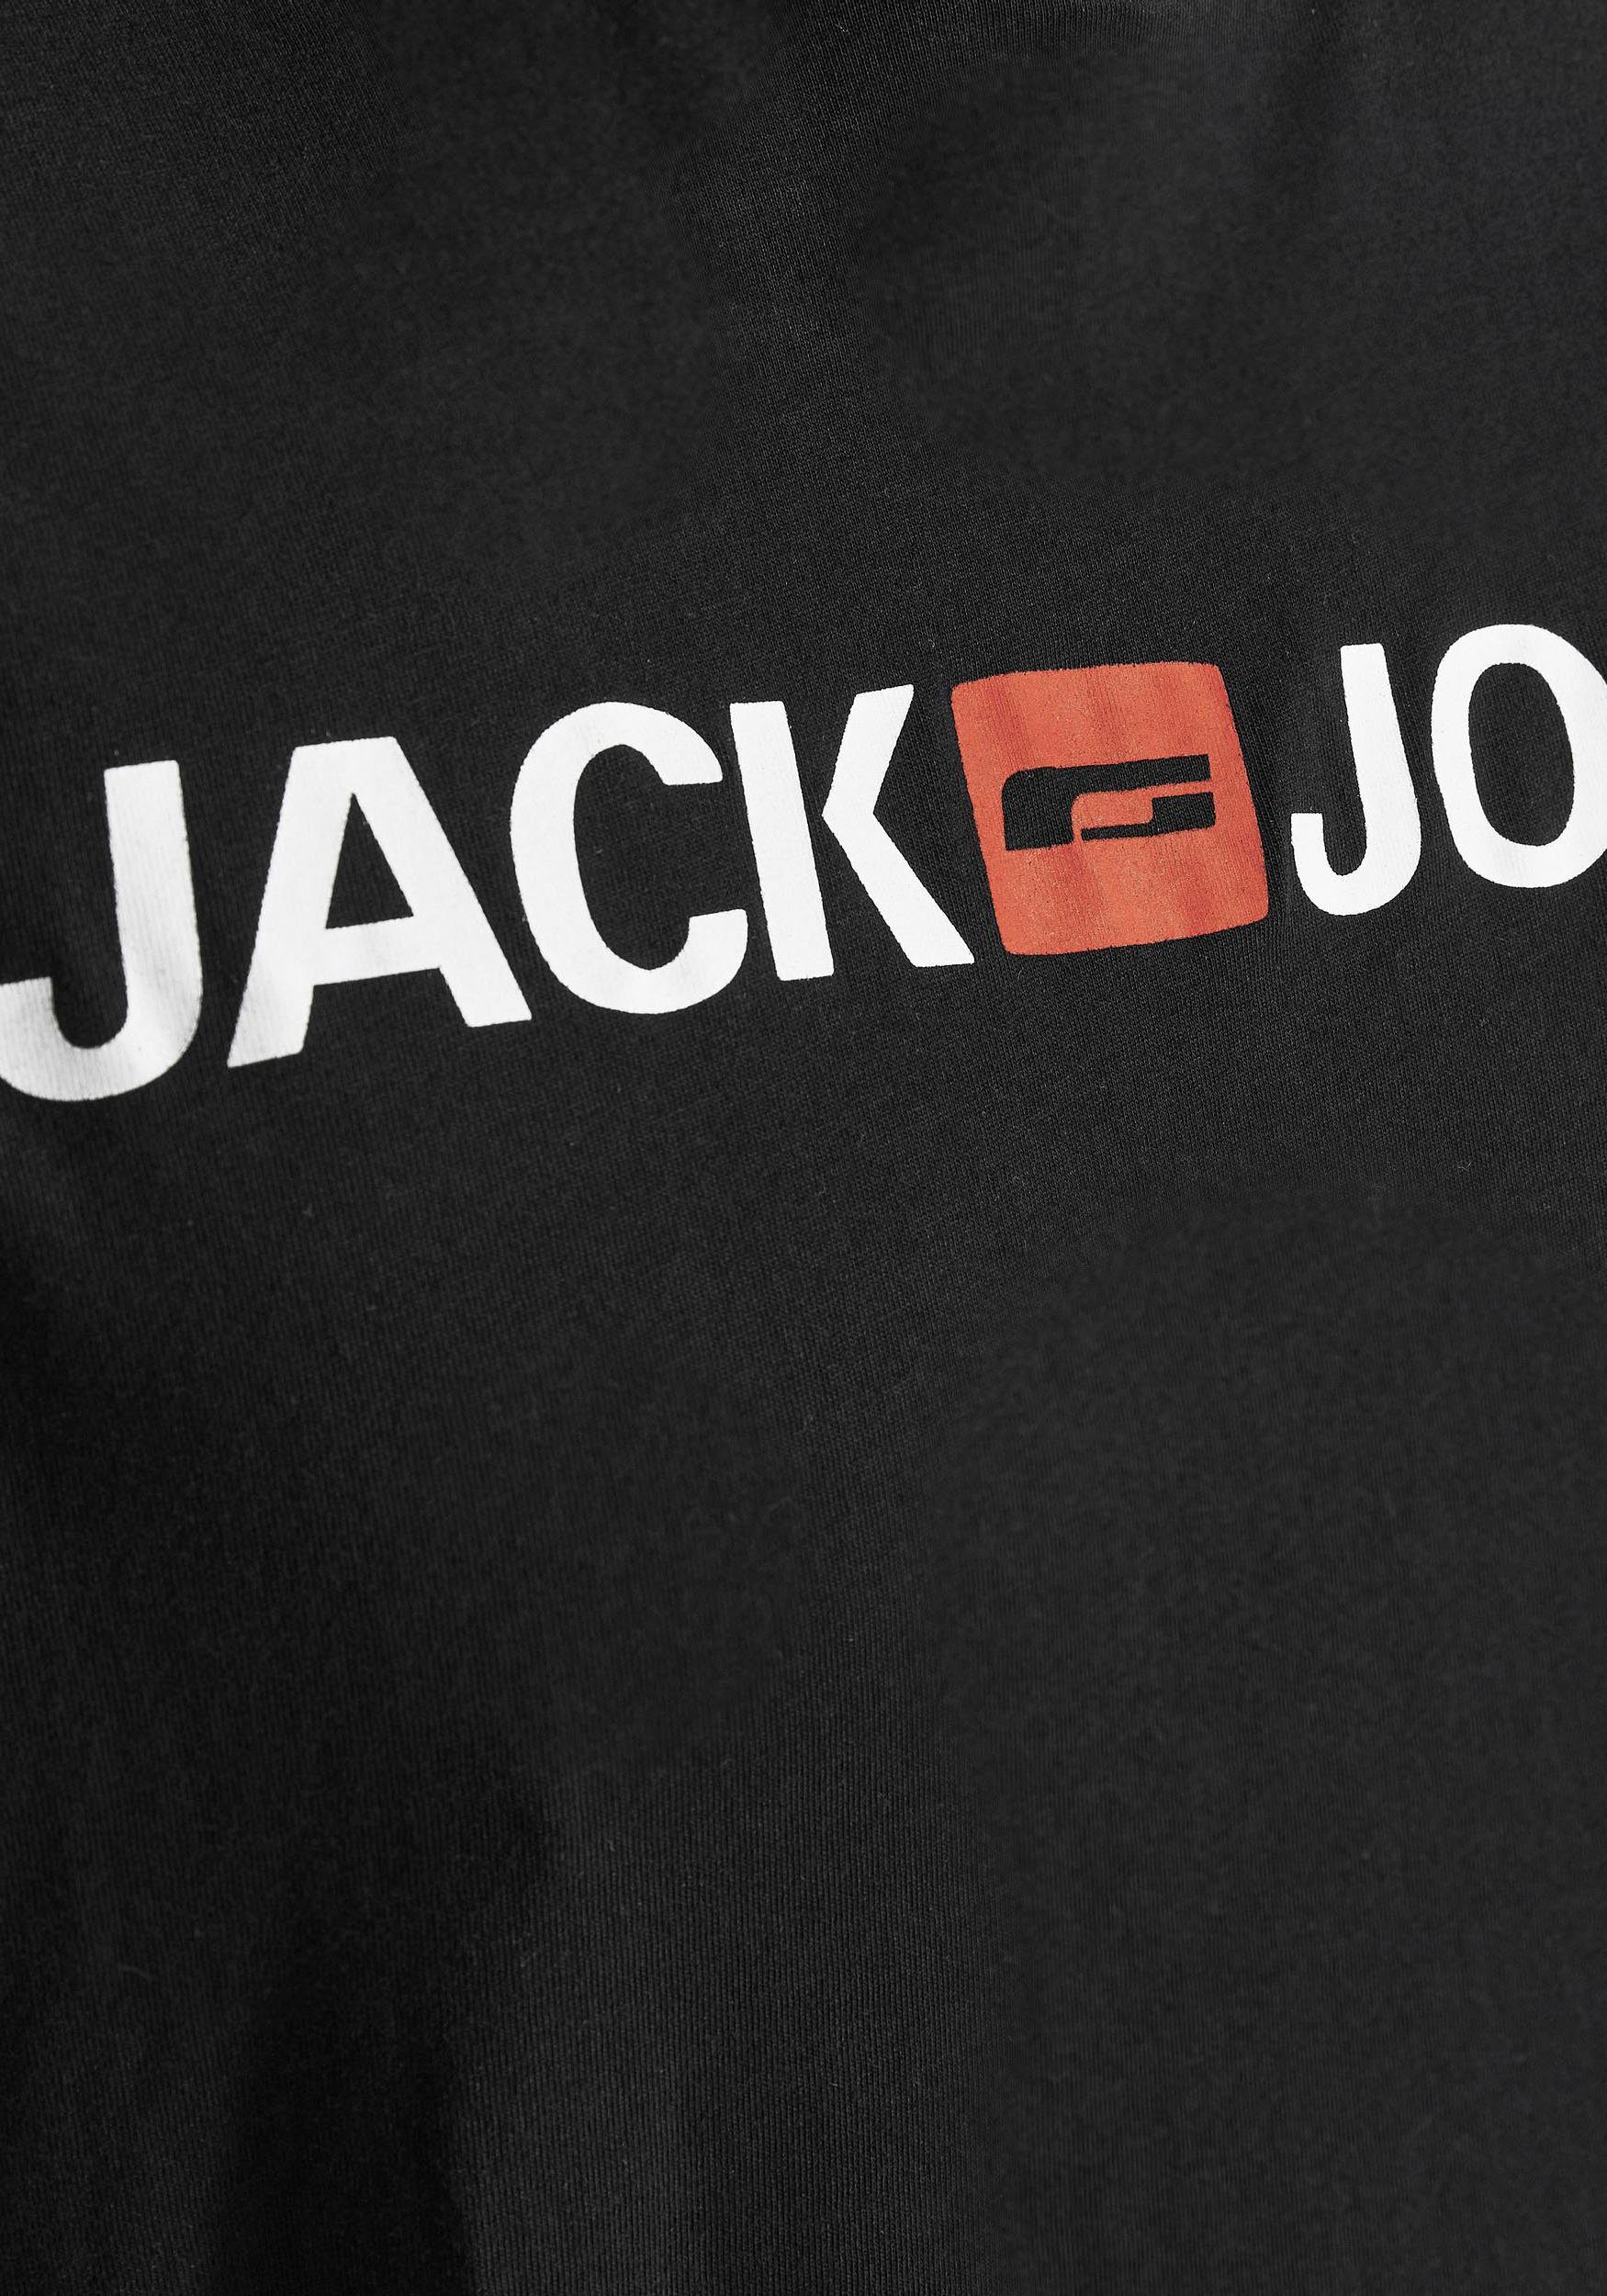 Jack & Jones PlusSize TEE LOGO CORP bis 6XL T-Shirt schwarz Größe